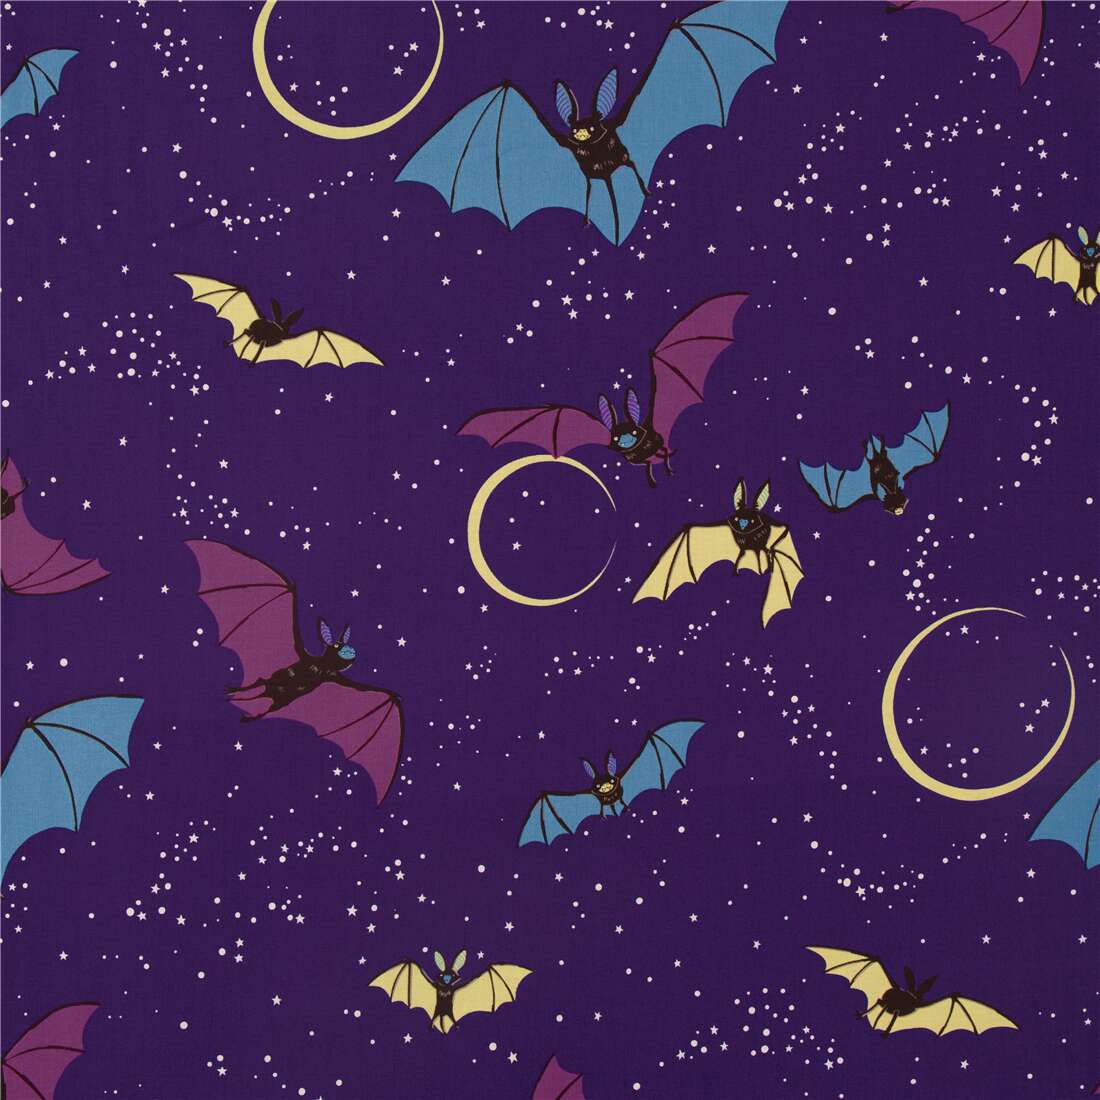 Fabric Bat Midnight Colony Full Moon Halloween Vampire Purple Sky Henry oop Yard 